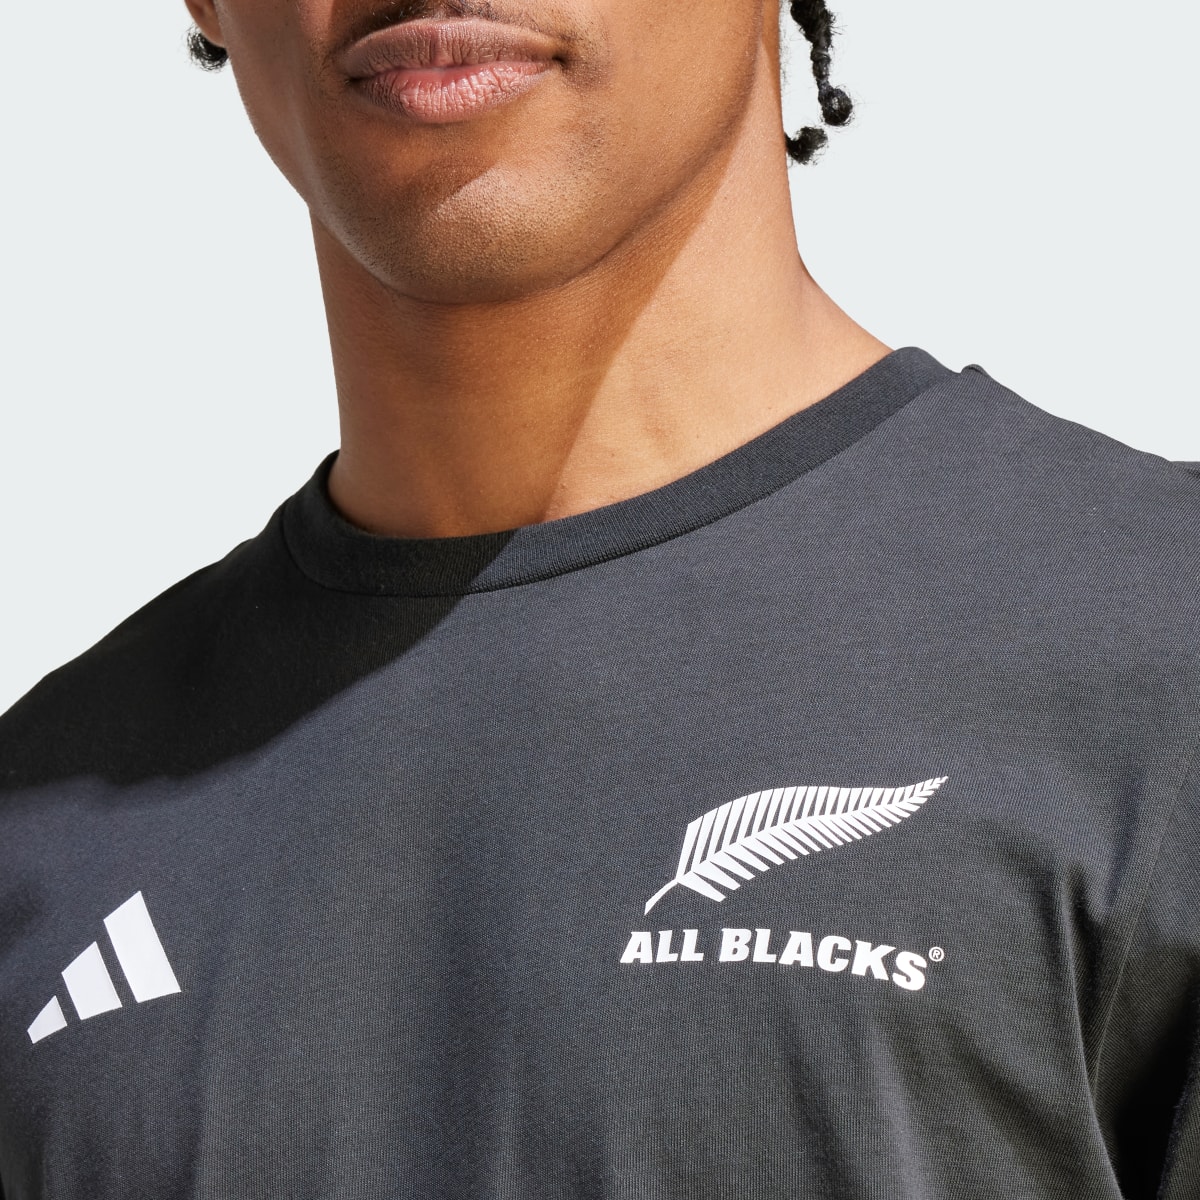 Adidas All Blacks Rugby Cotton Tee. 7